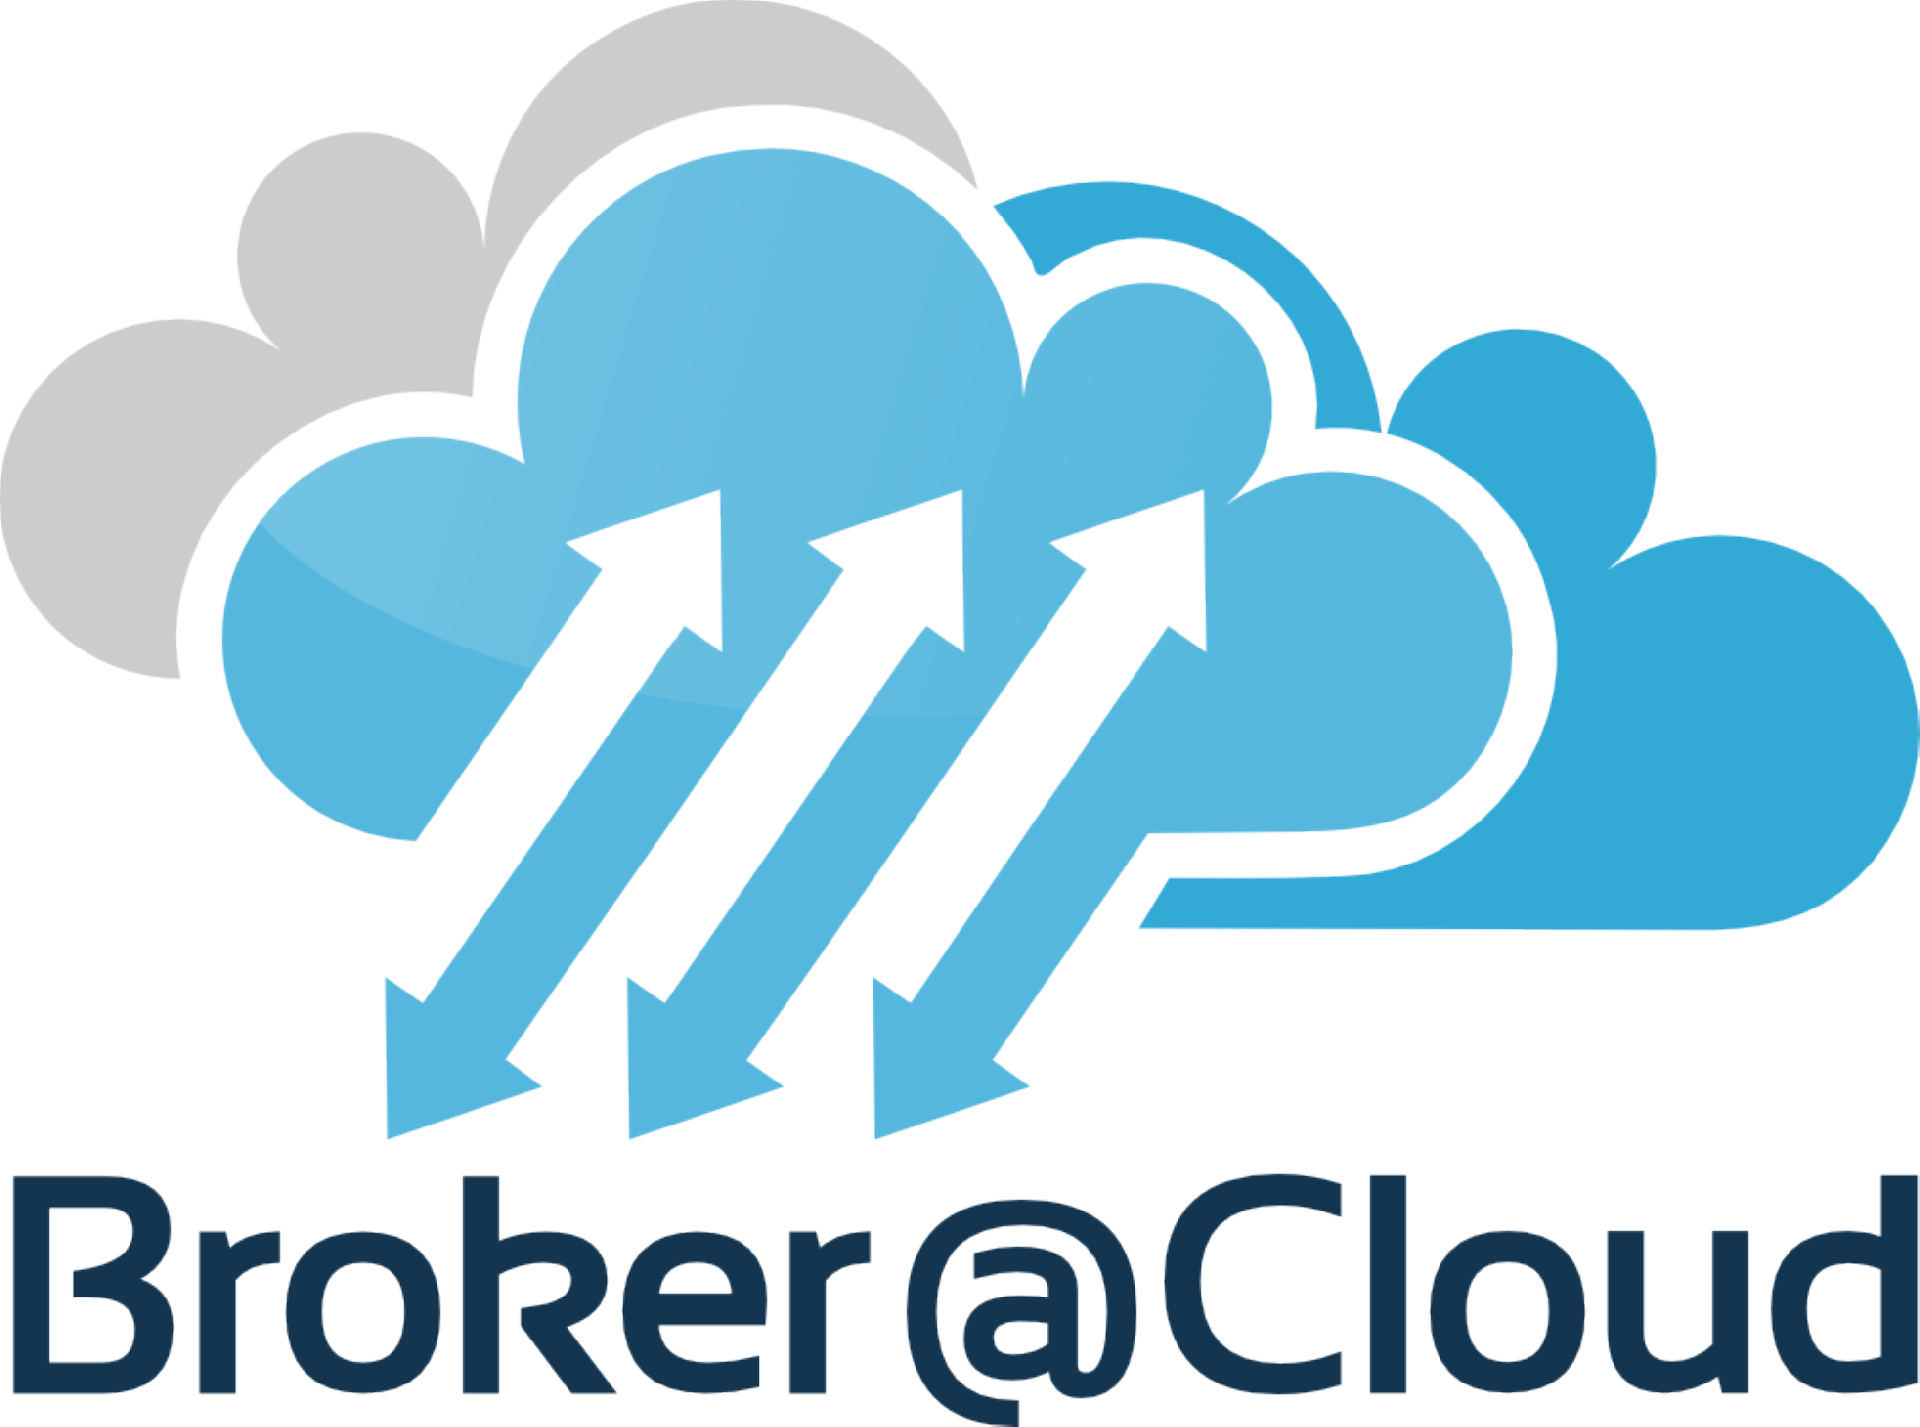 Broker@cloud Logo - Cloud Service Broker Icon (1920x1427)